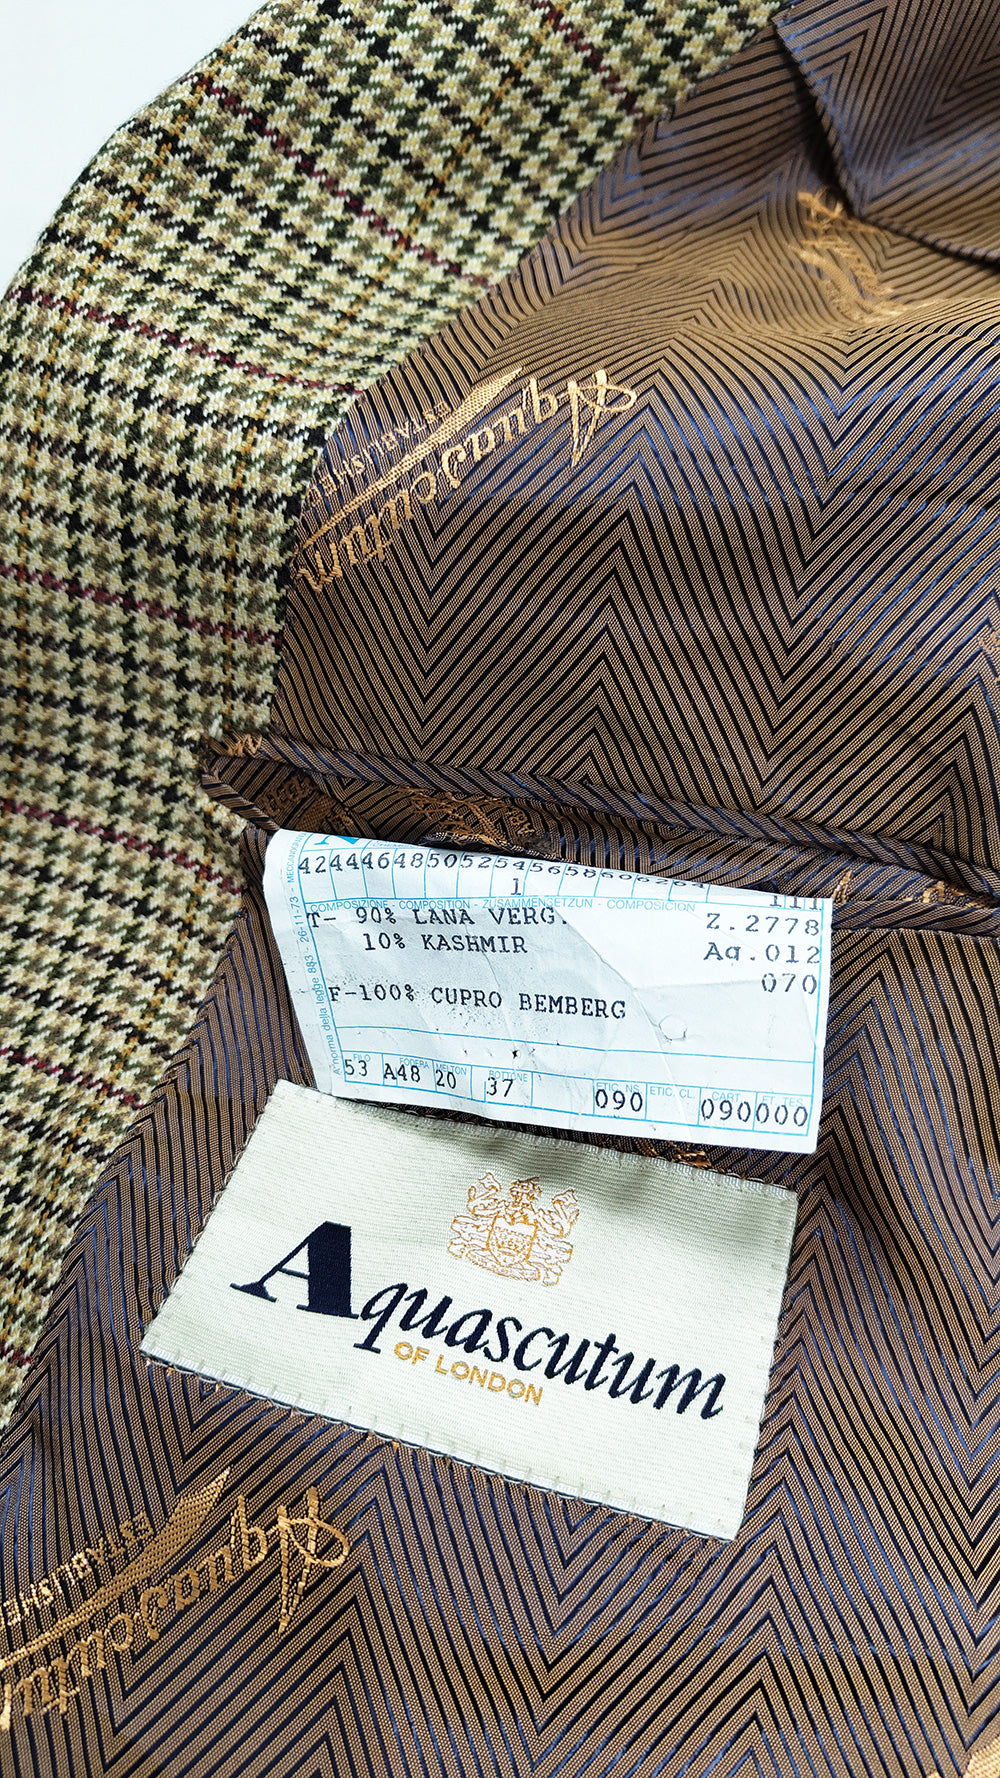 Aquascutum Vintage Wool & Cashmere Mens Blazer, 1990s